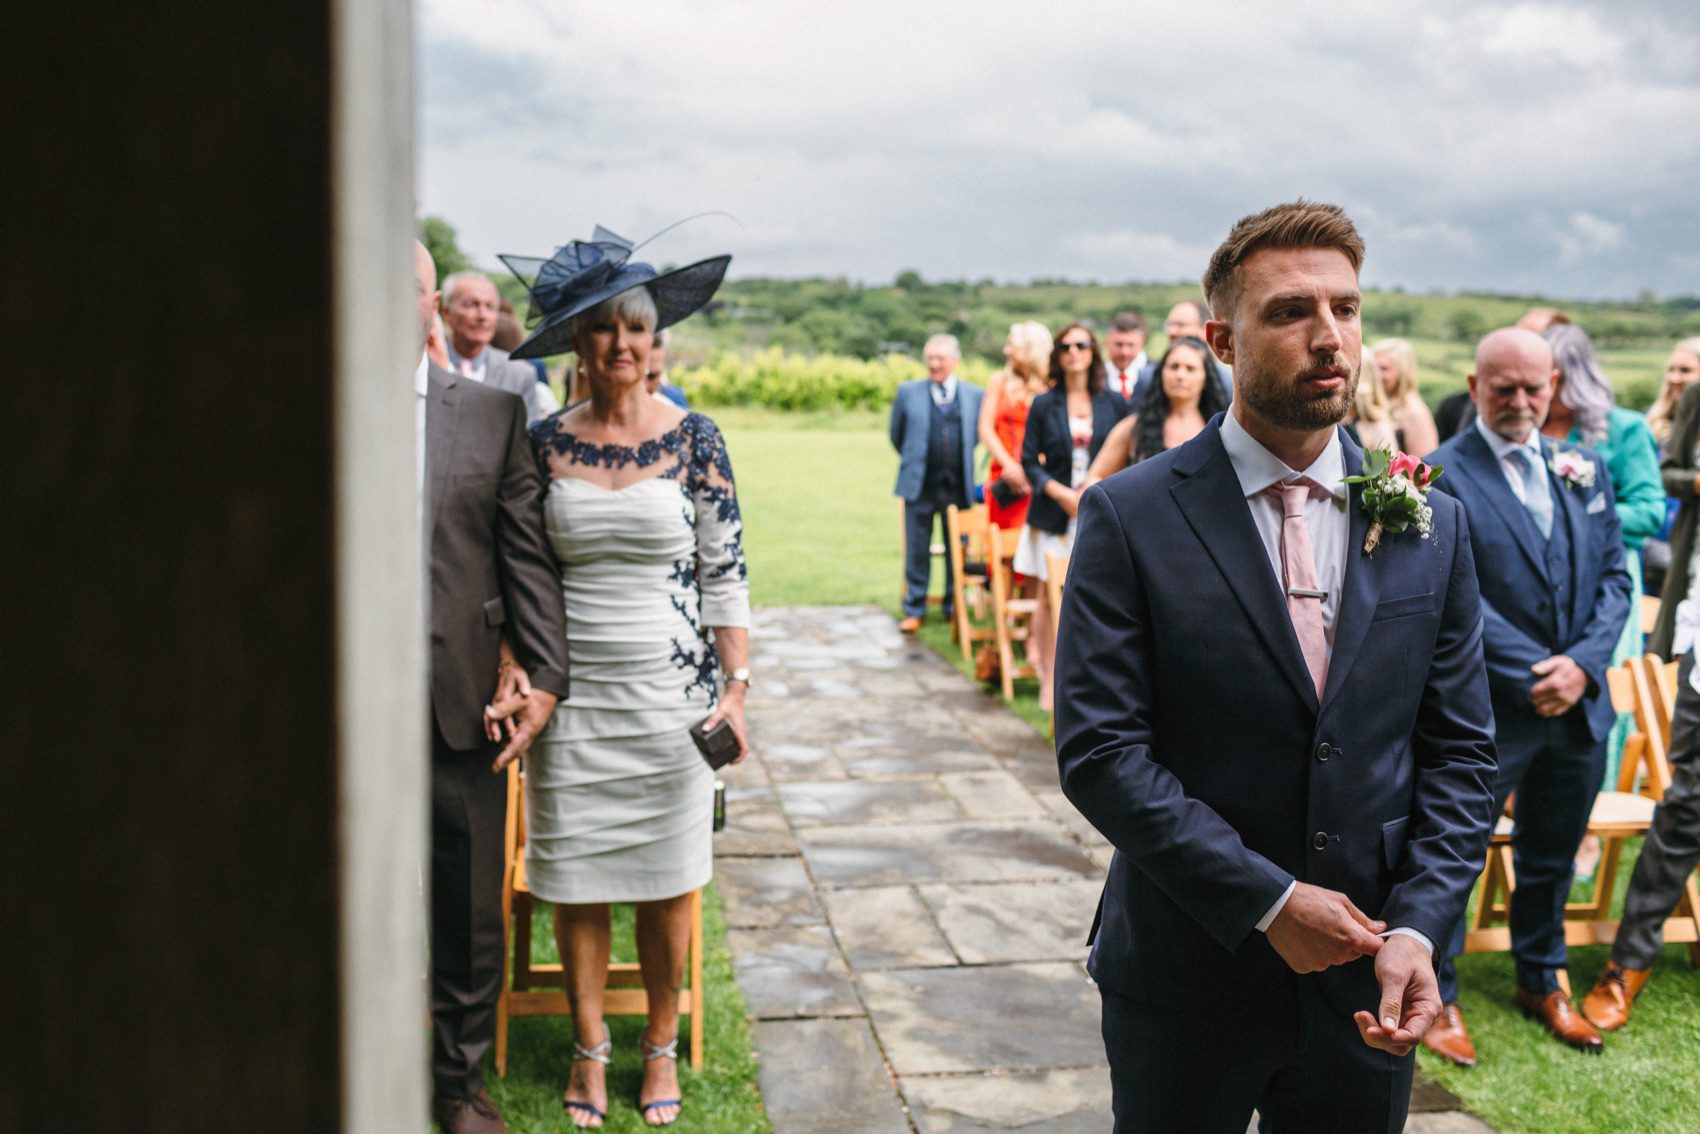 Groom awaits bride - documentary wedding photographer Devon and Cornwall